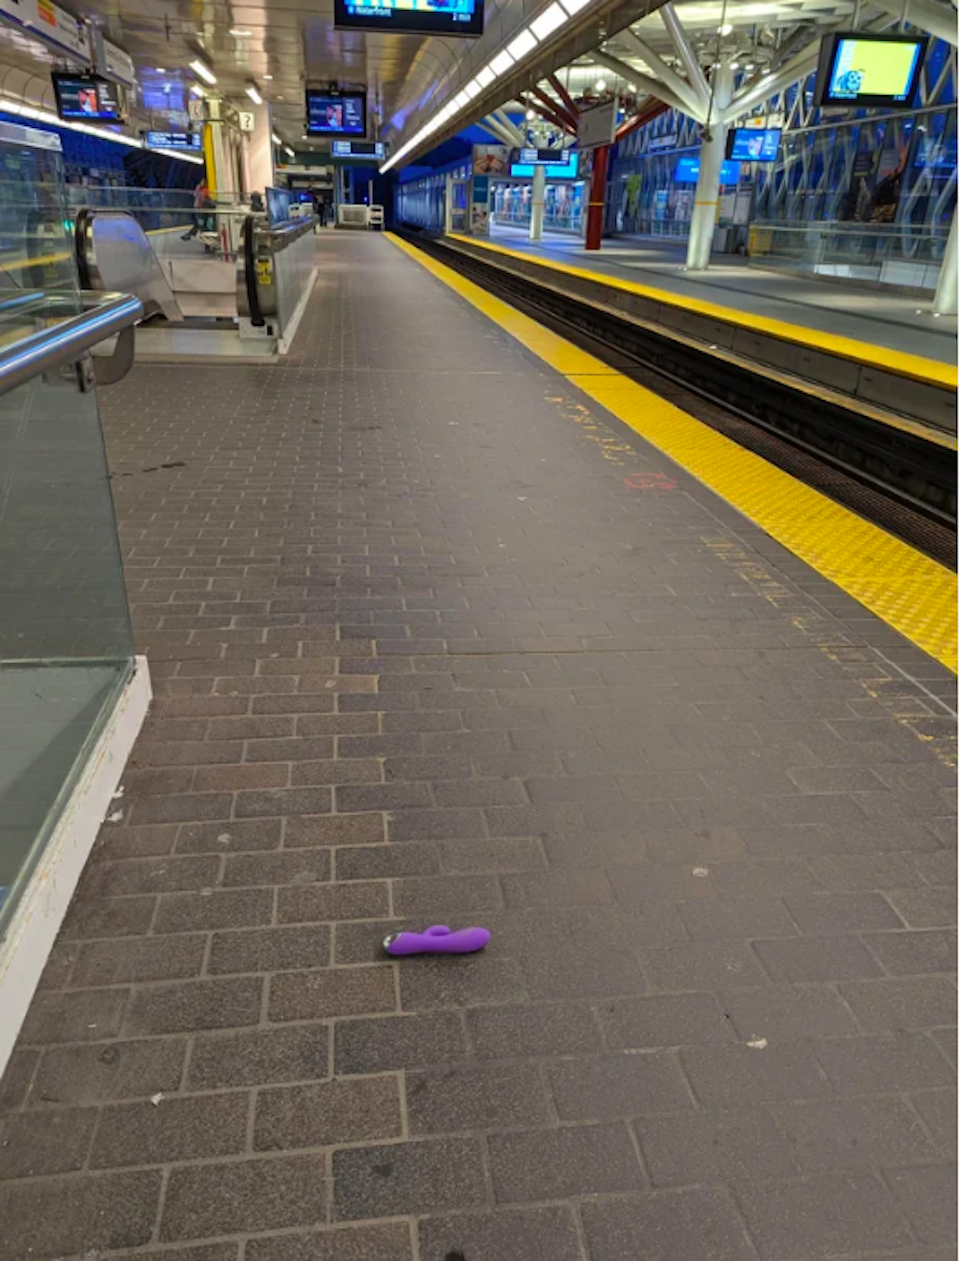 purple-dildo-metro-vancouver-skytrain-stationjpg